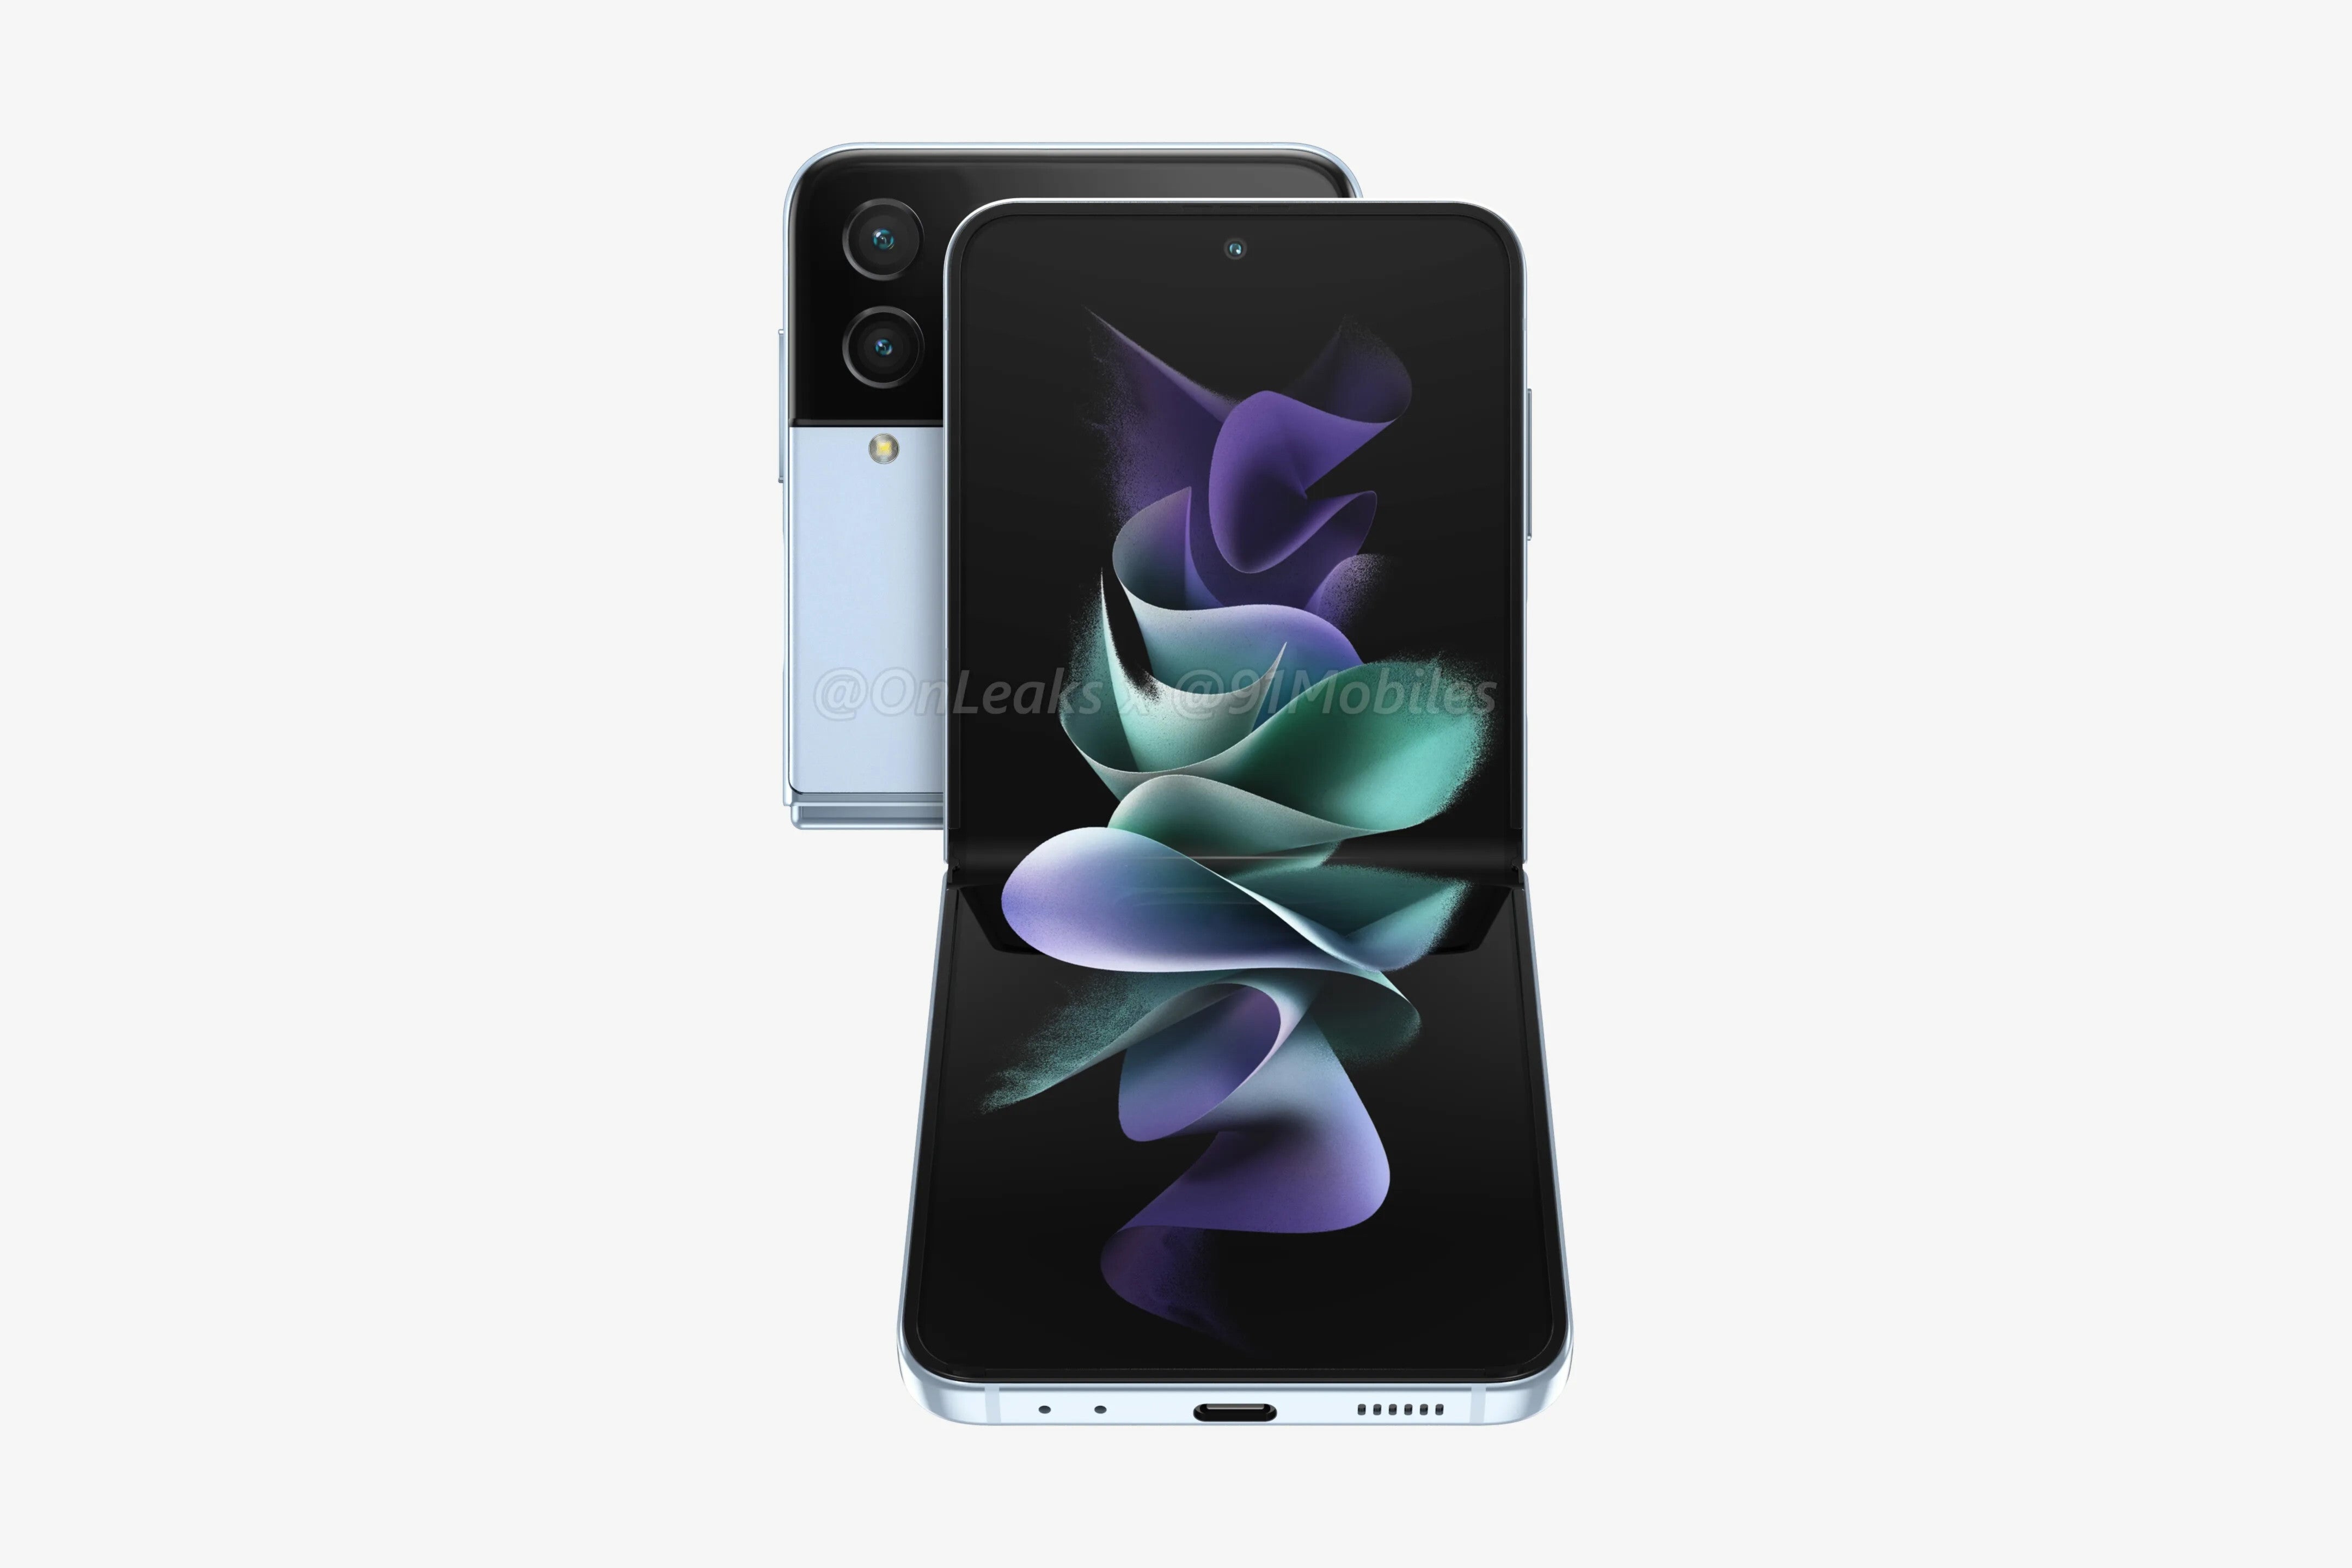 Huge Samsung Galaxy Z Flip 4 leak shows off very familiar design